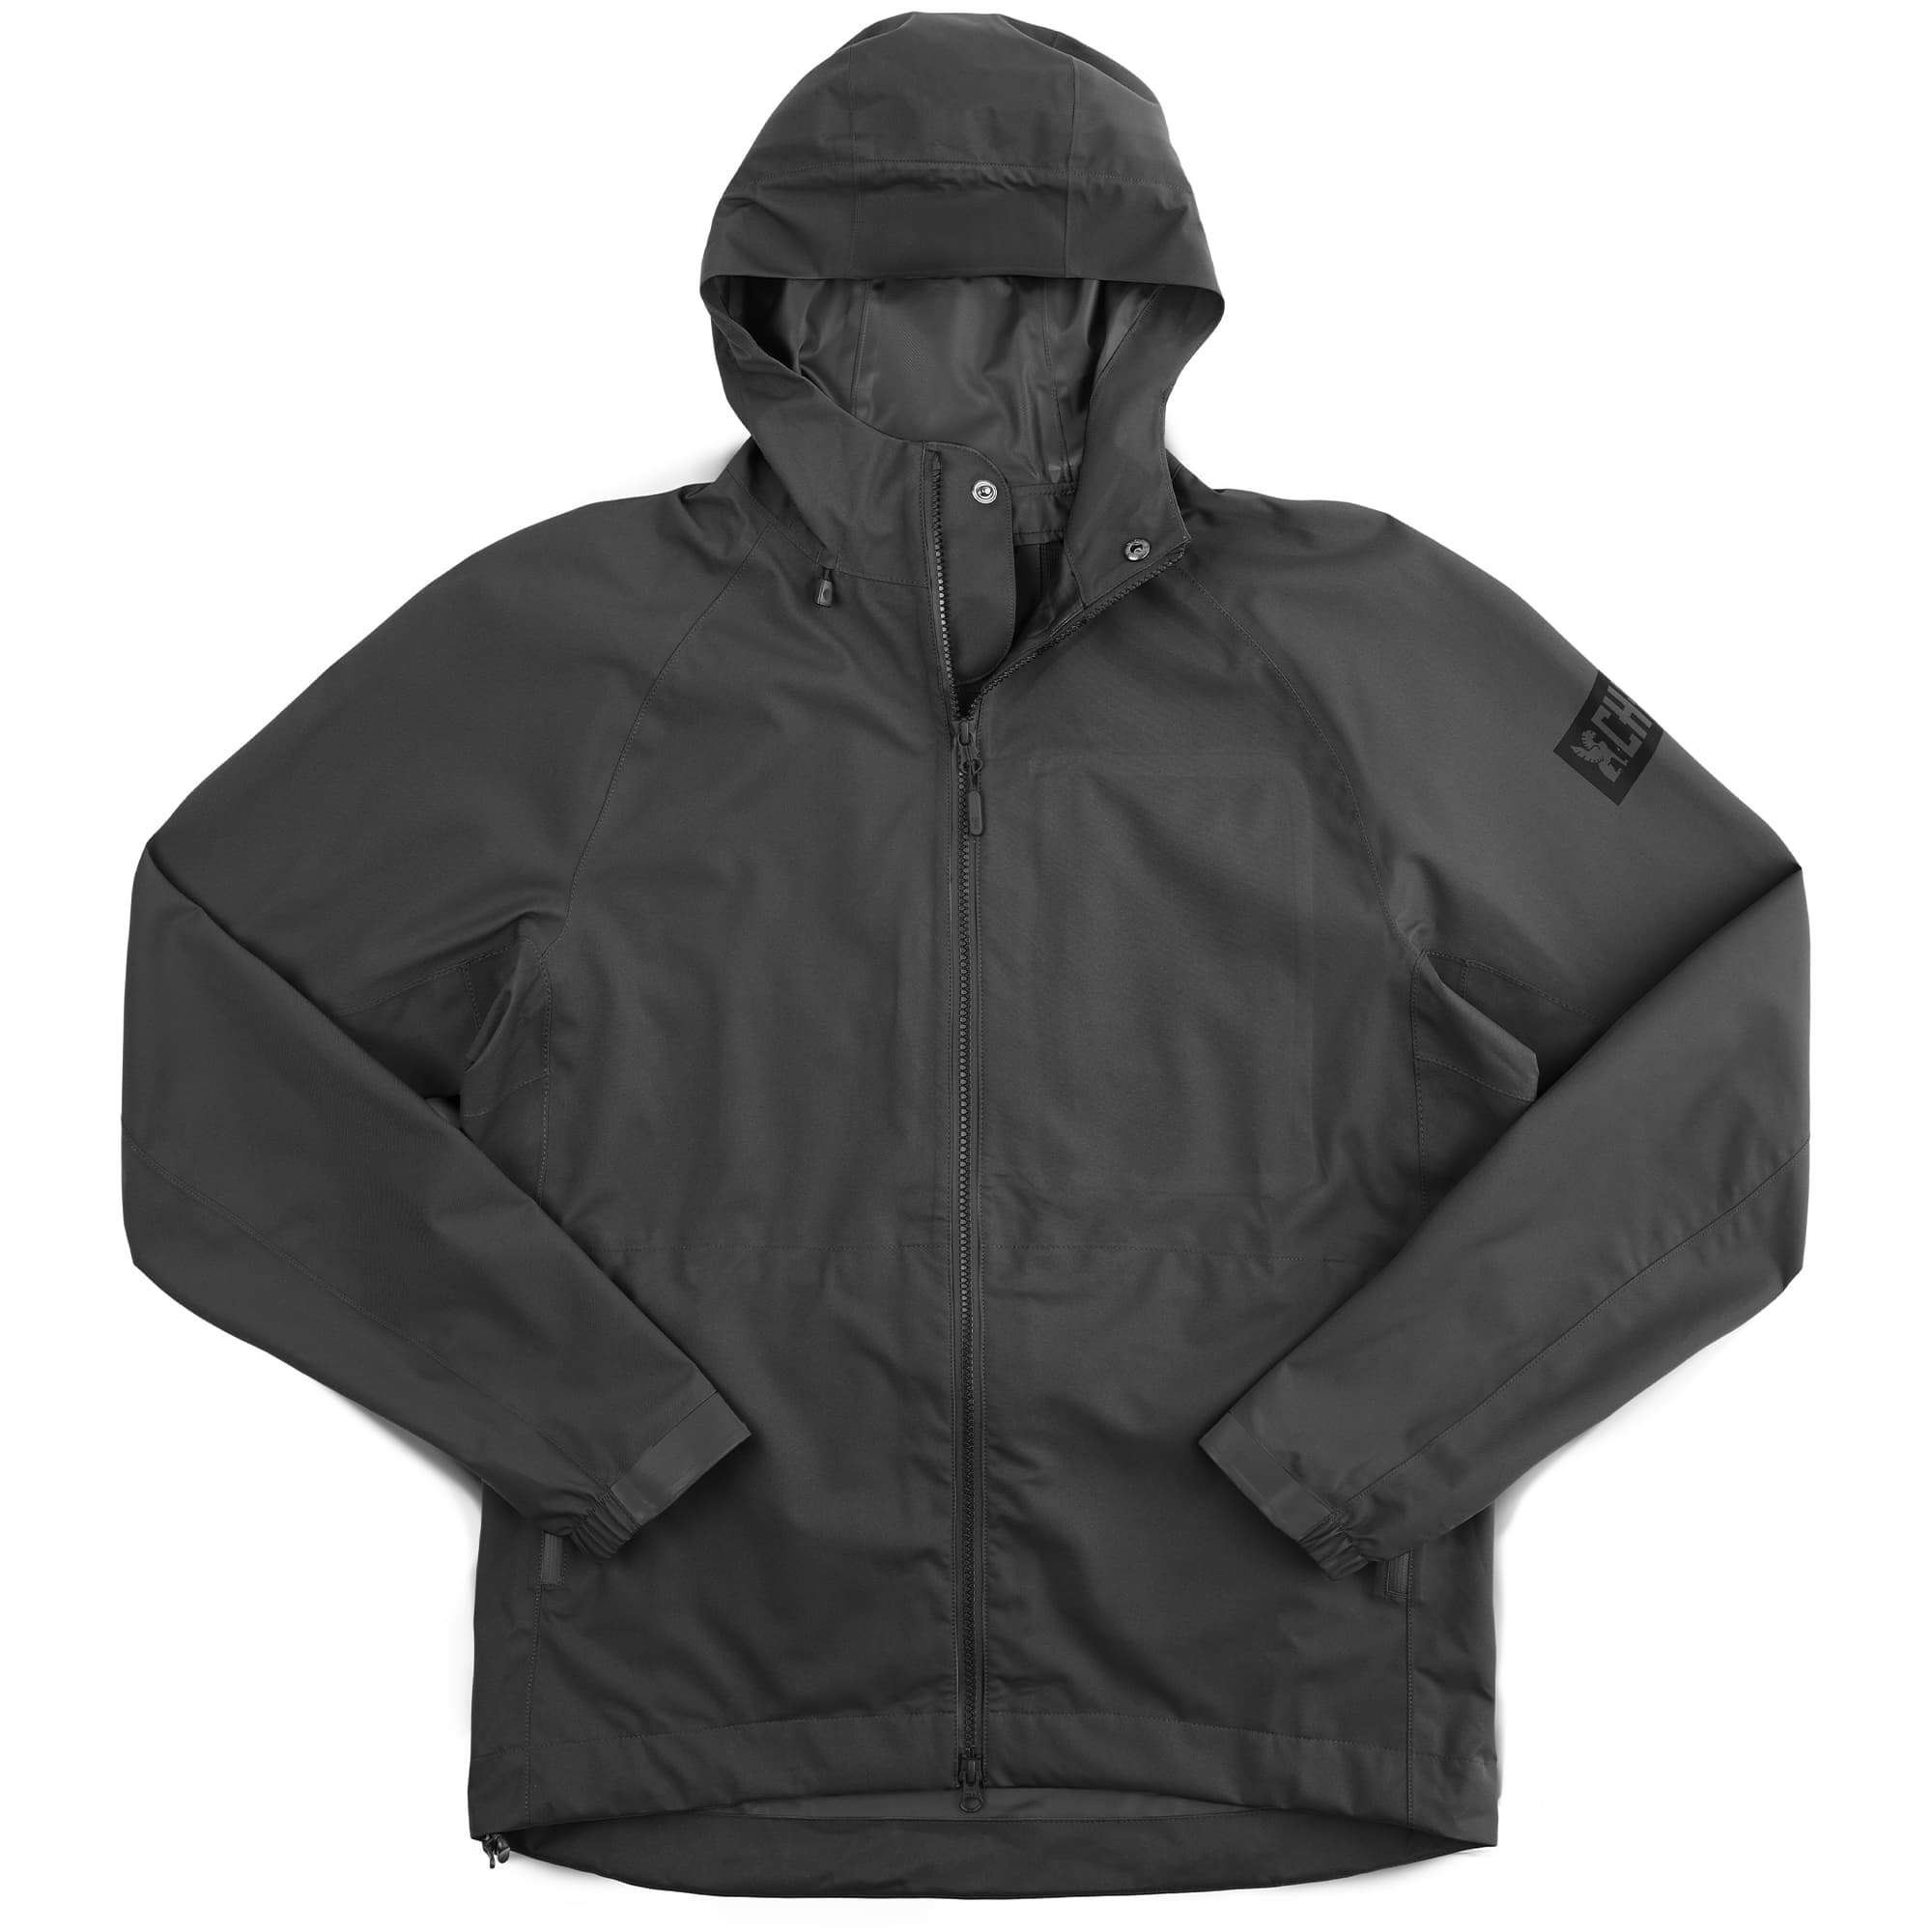 Waterproof rain jacket in black front view